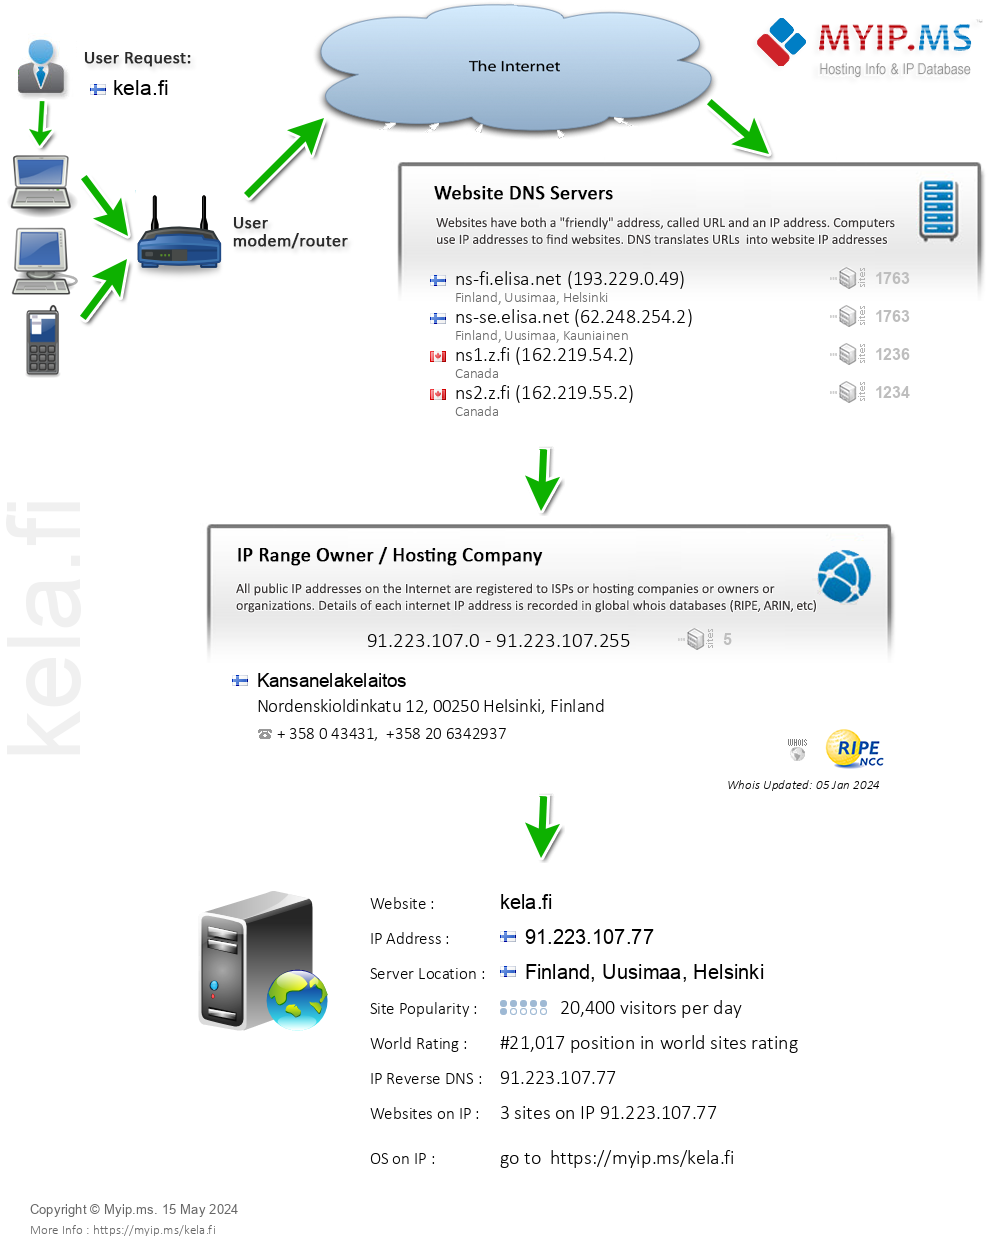 Kela.fi - Website Hosting Visual IP Diagram